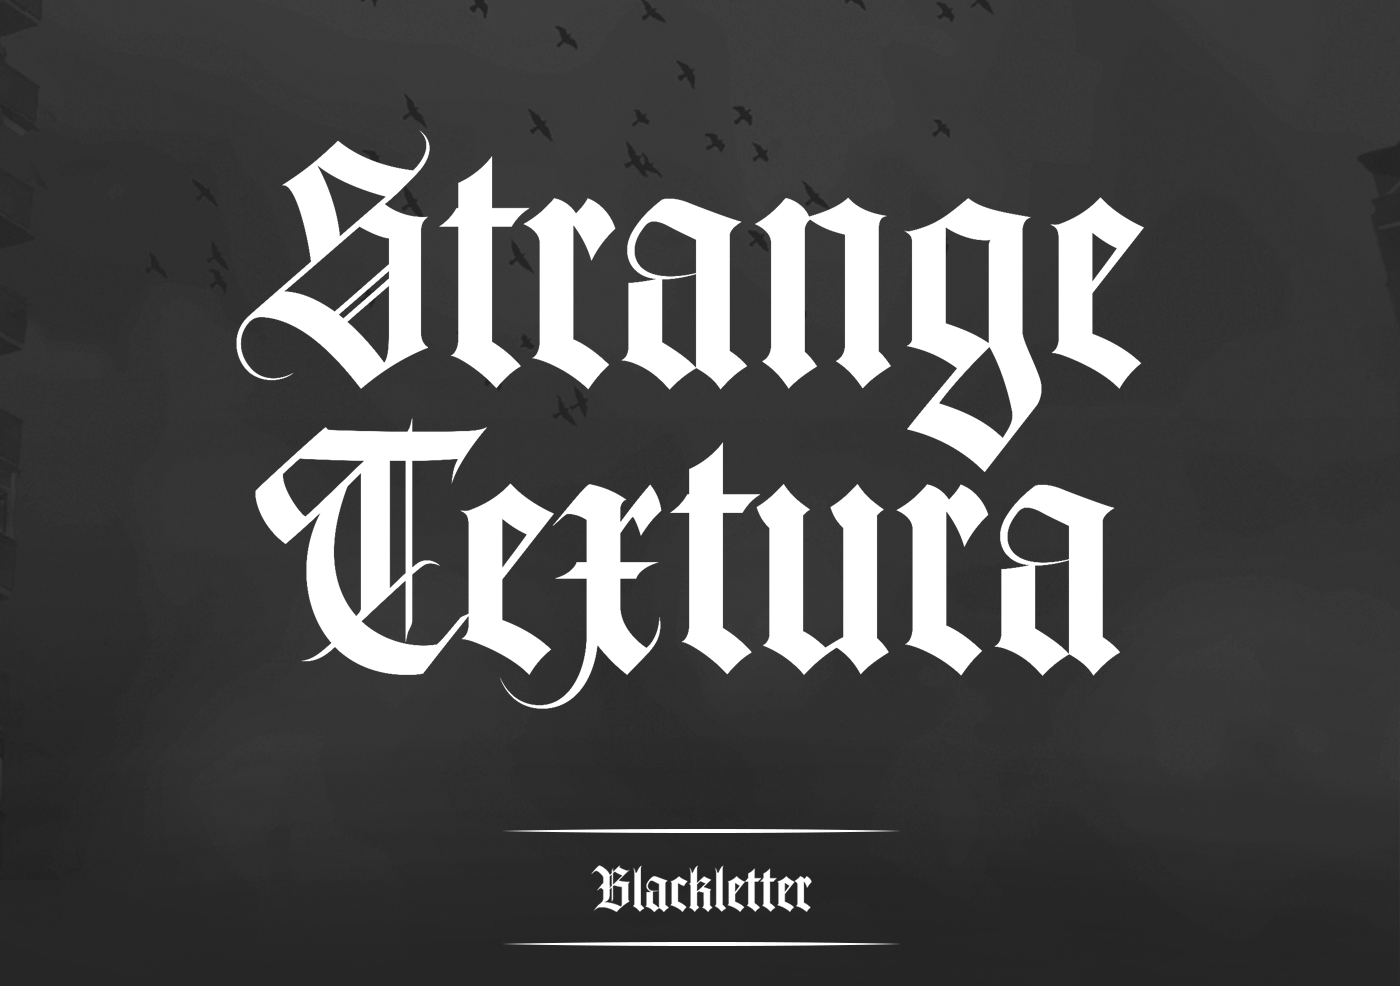 strange textura texture font typo police Typeface gothique Blackletter student